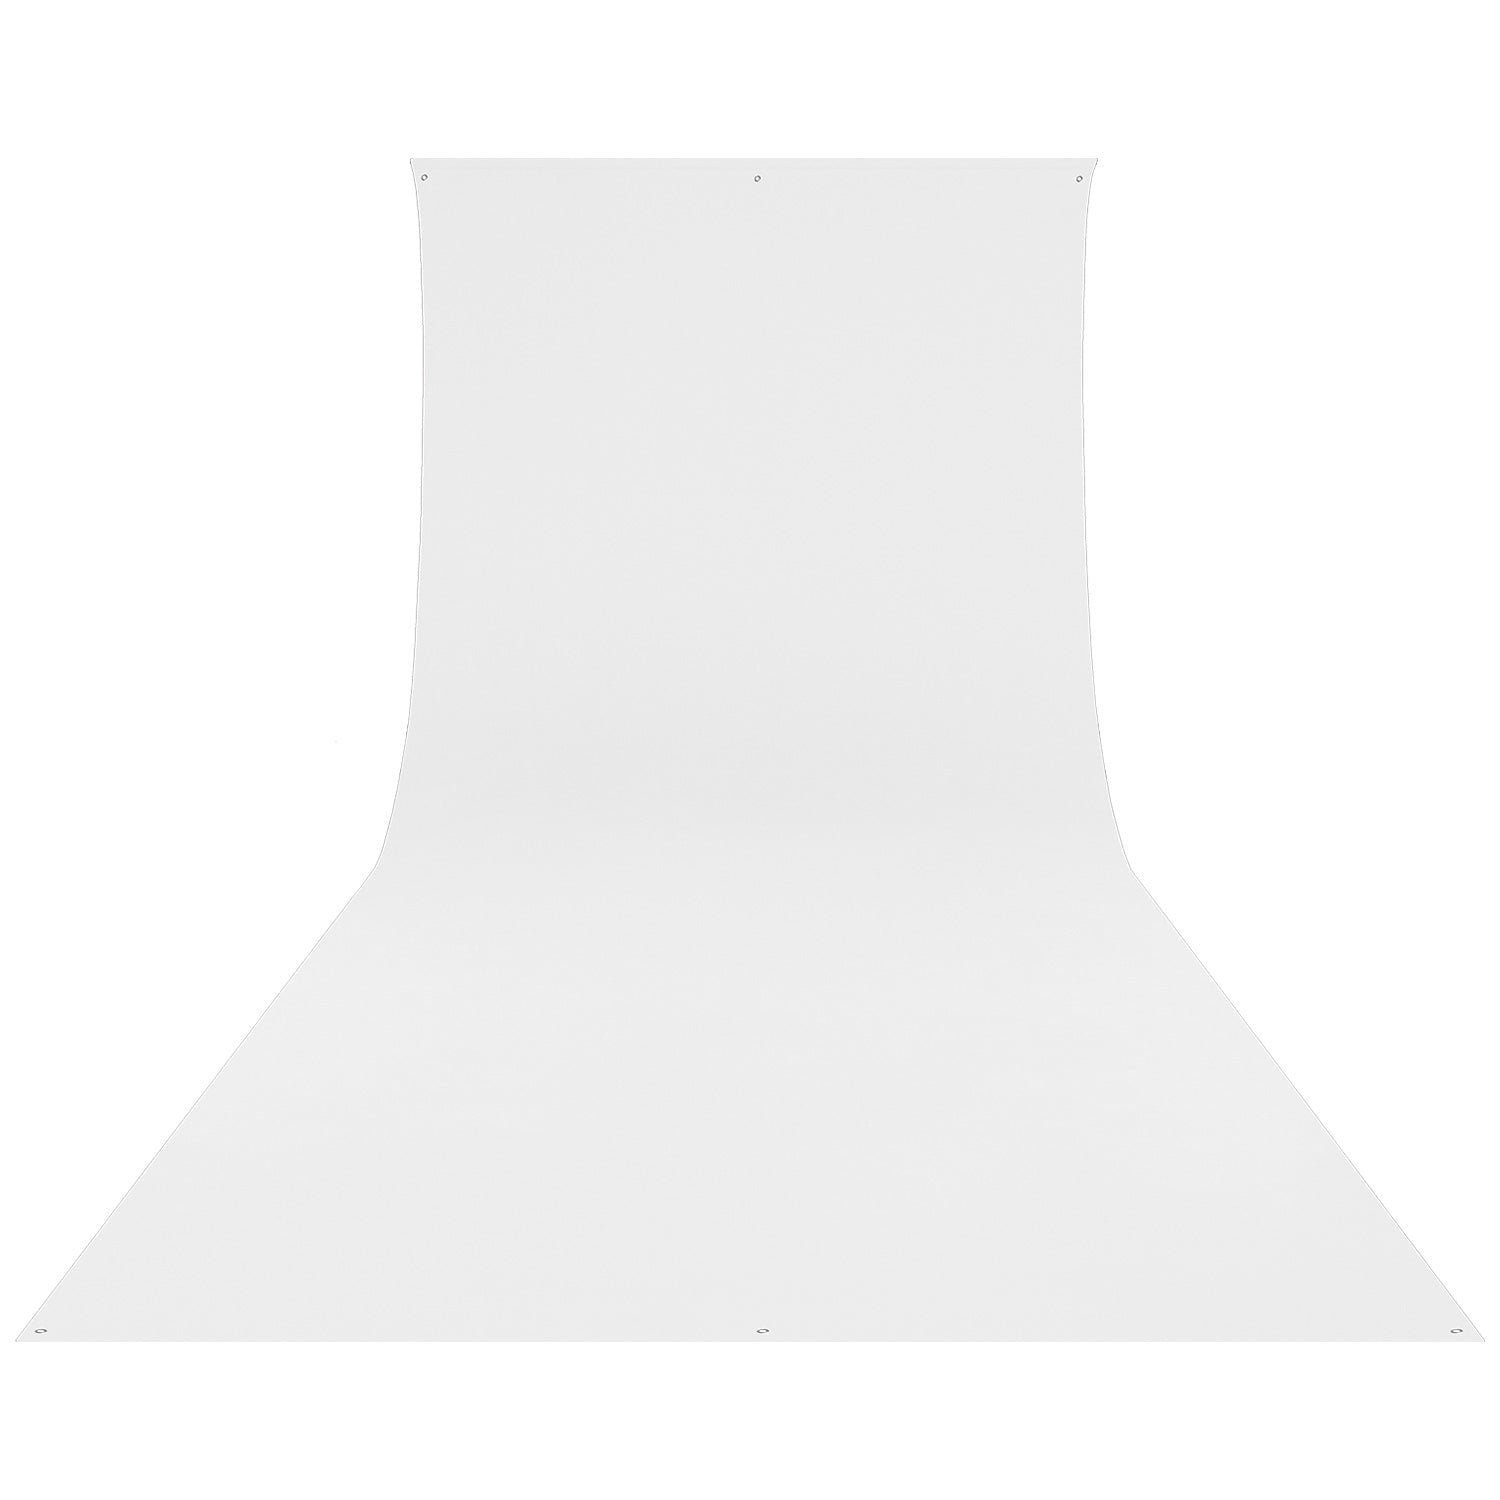 Wrinkle-Resistant Backdrop - High-Key White (9' x 20')